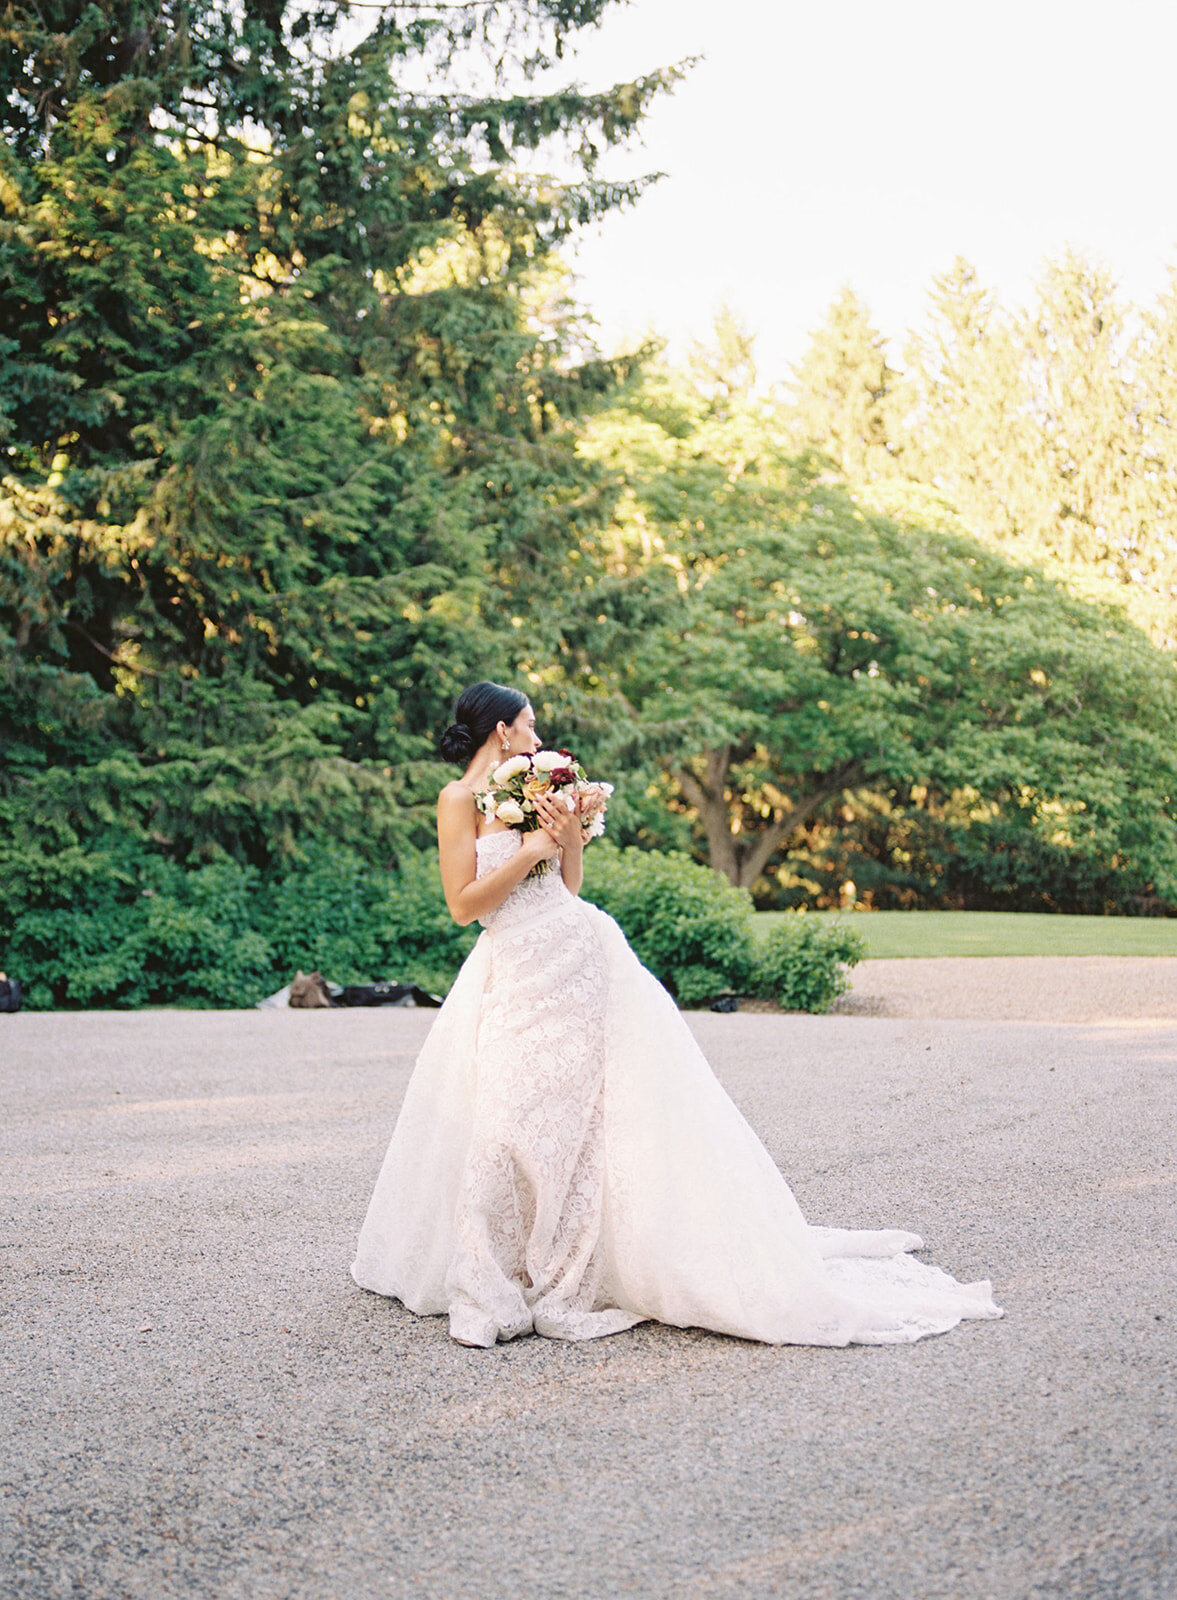 Greencrest Manor - Battle Creek Michigan Wedding Venues - Stephanie Michelle Photography - _stephaniemichellephotog8-R1-E007